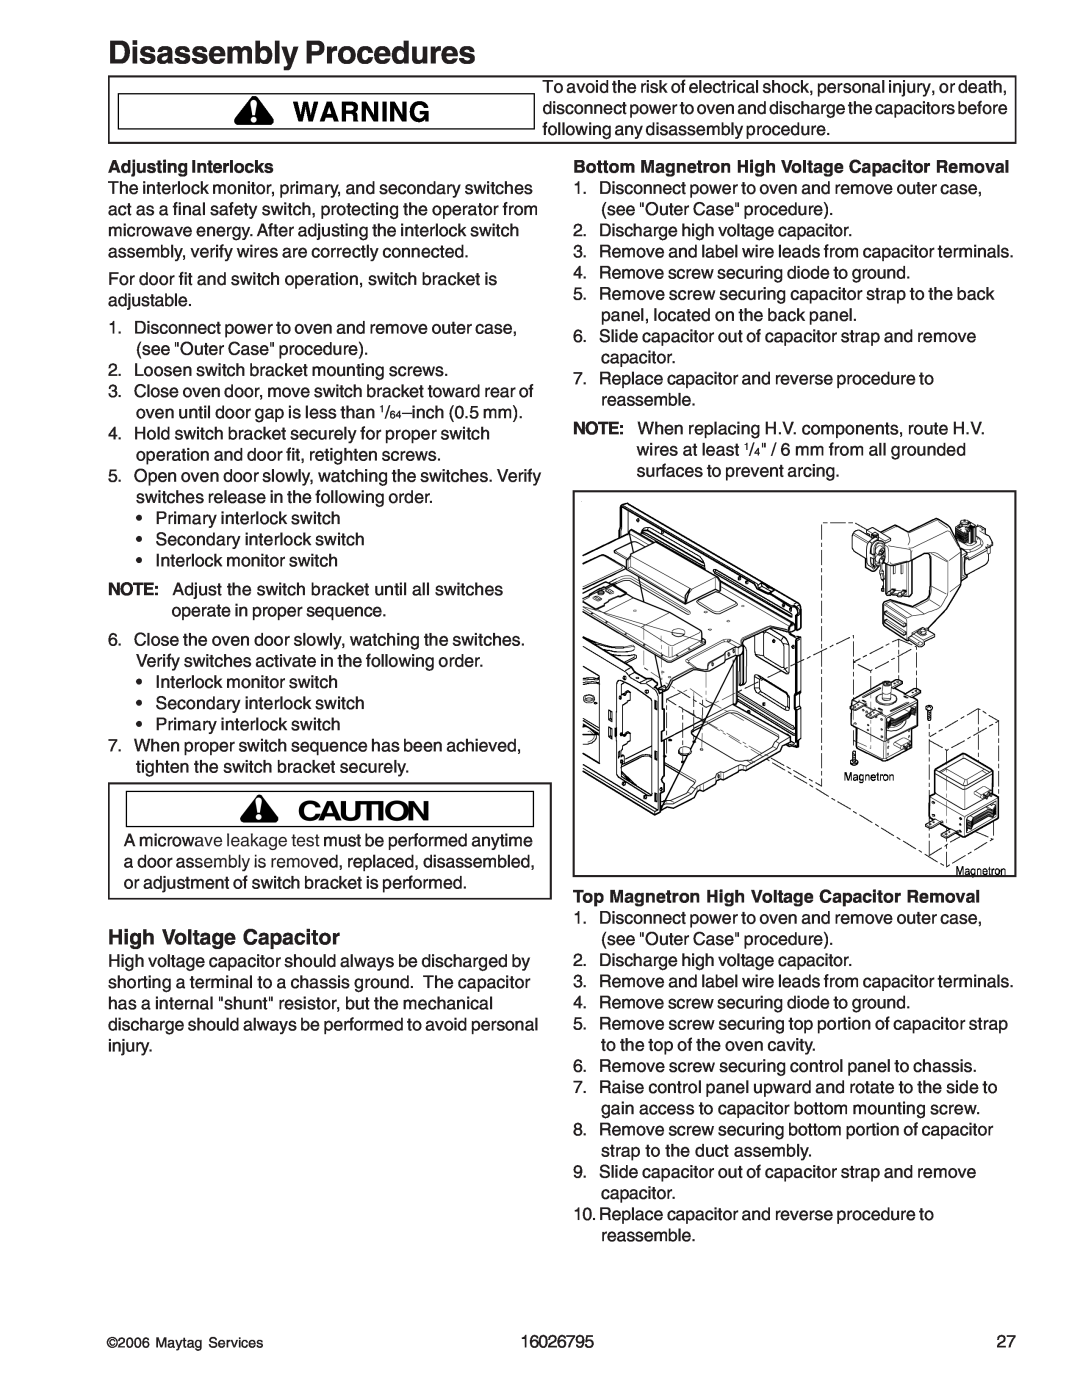 Maytag 1800 W - 2005 manual High Voltage Capacitor, Disassembly Procedures, Adjusting Interlocks 